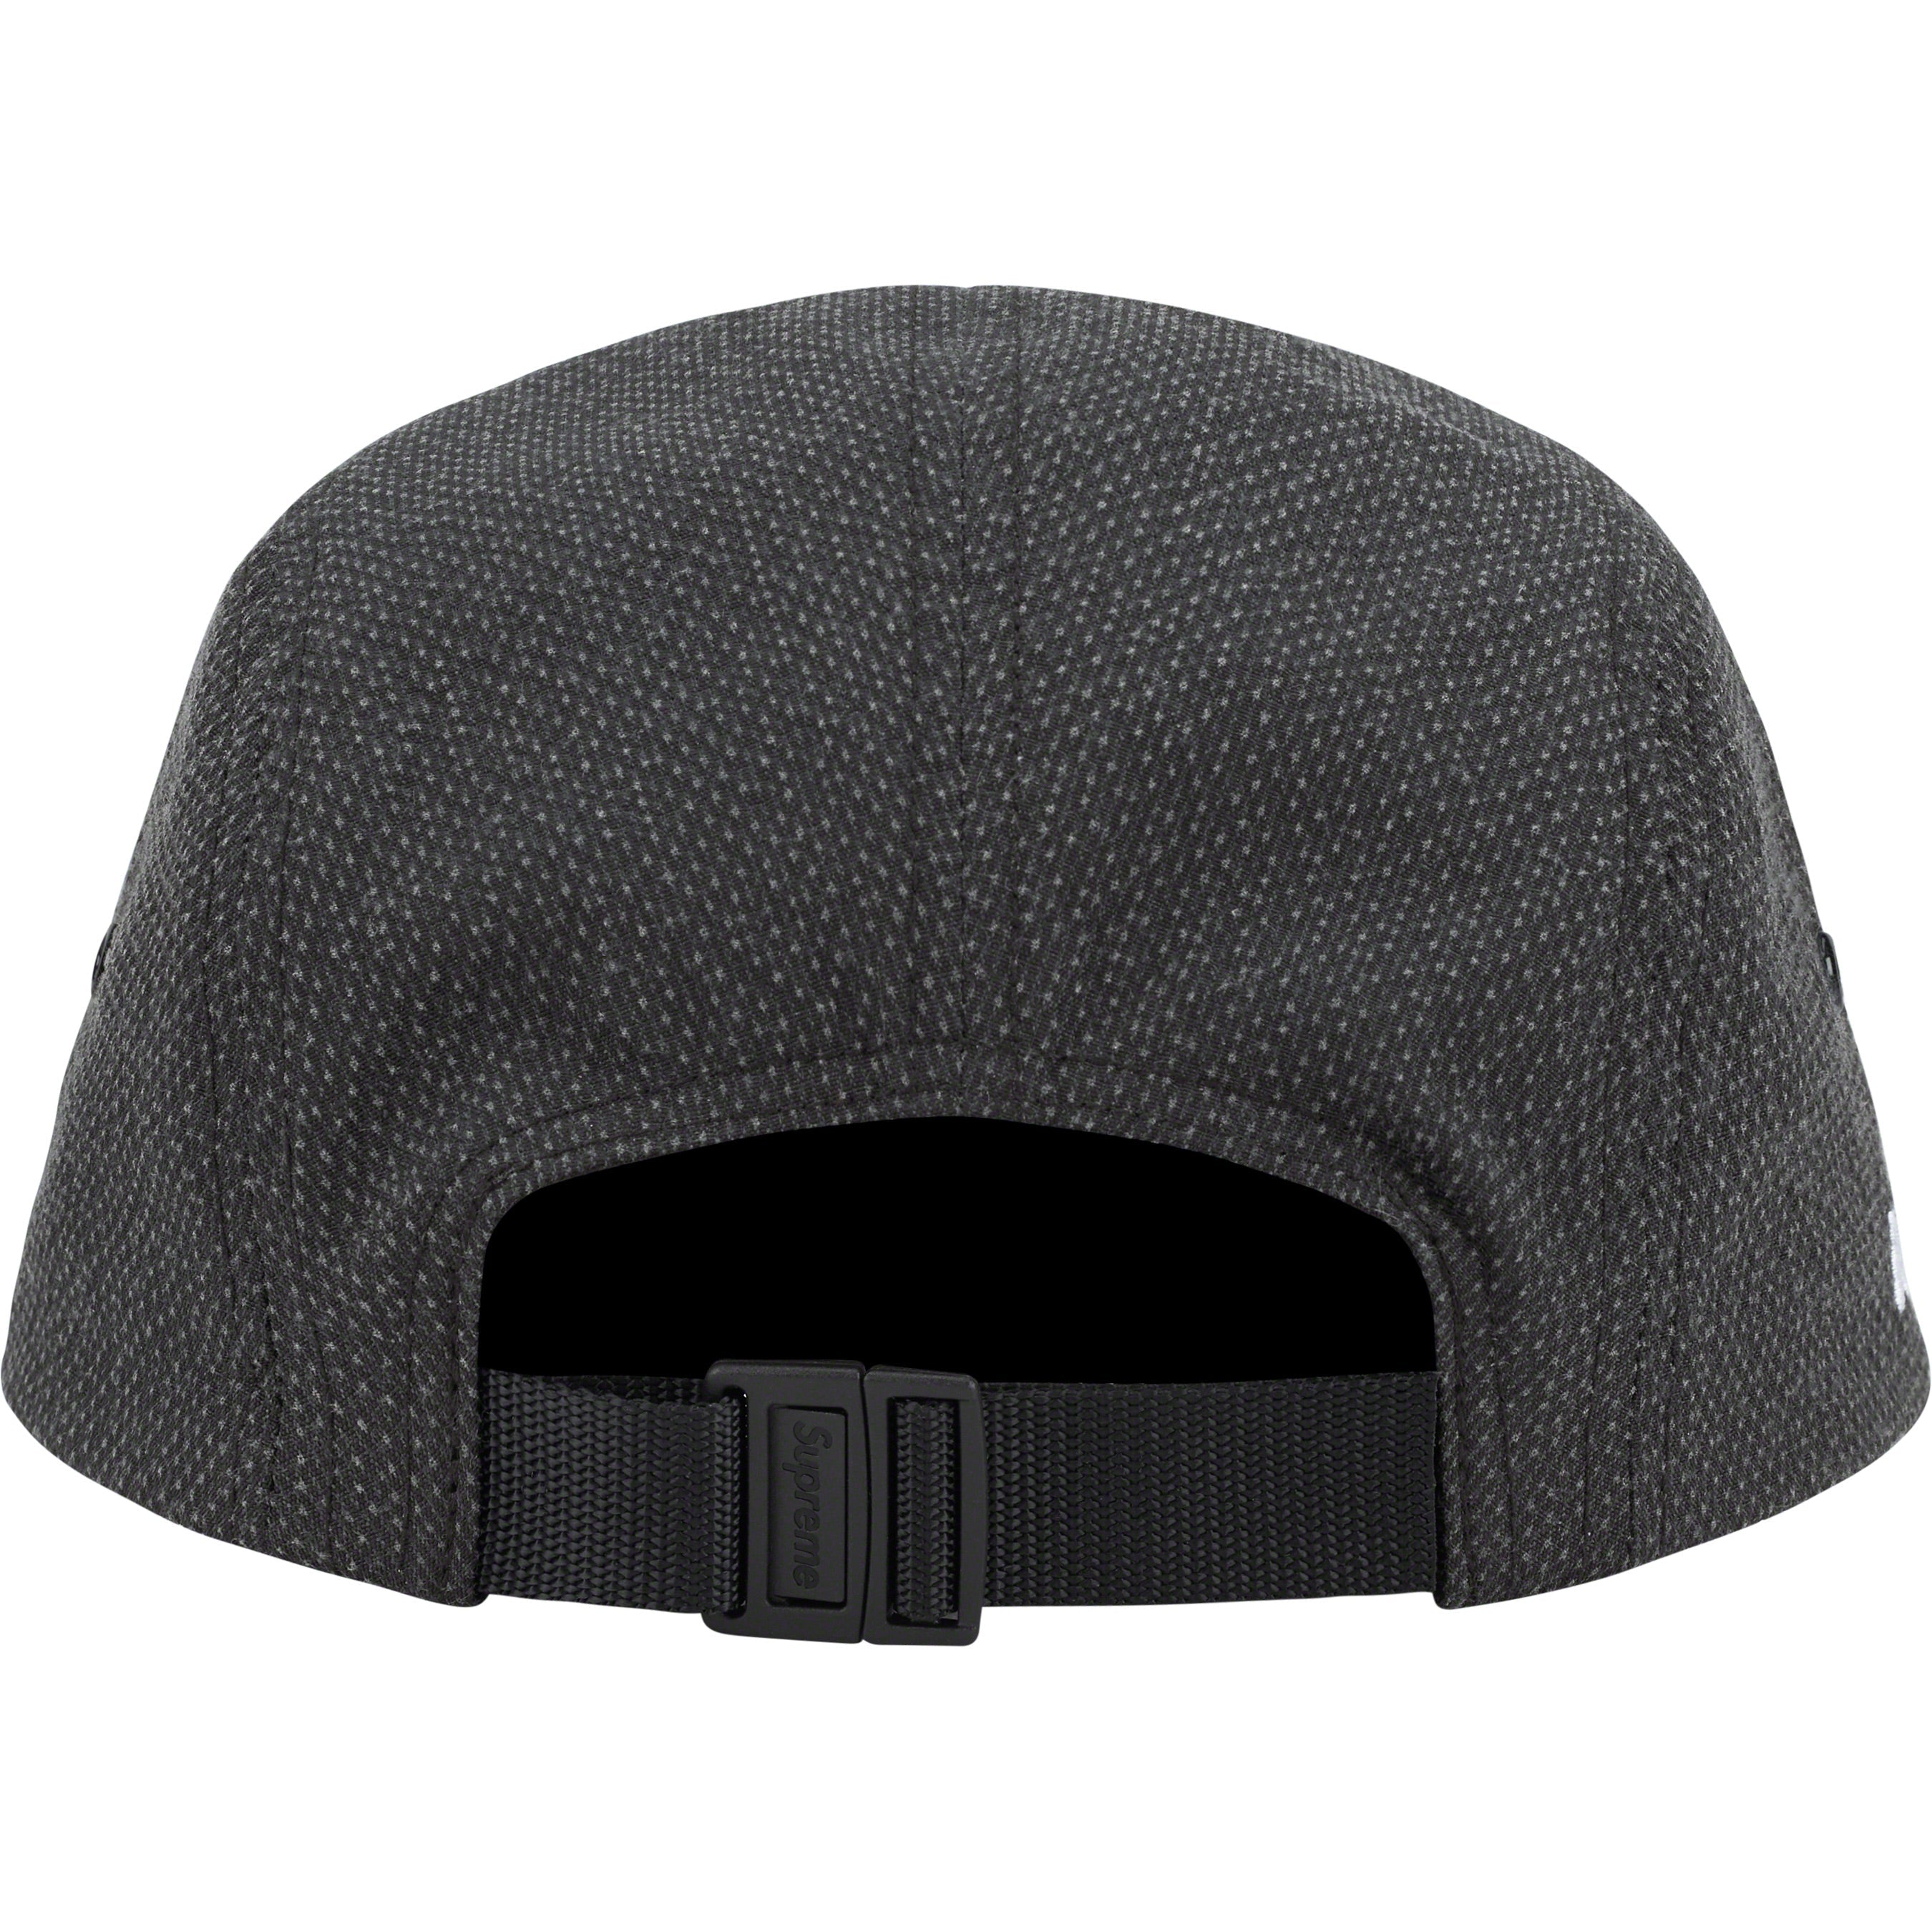 supreme cap black